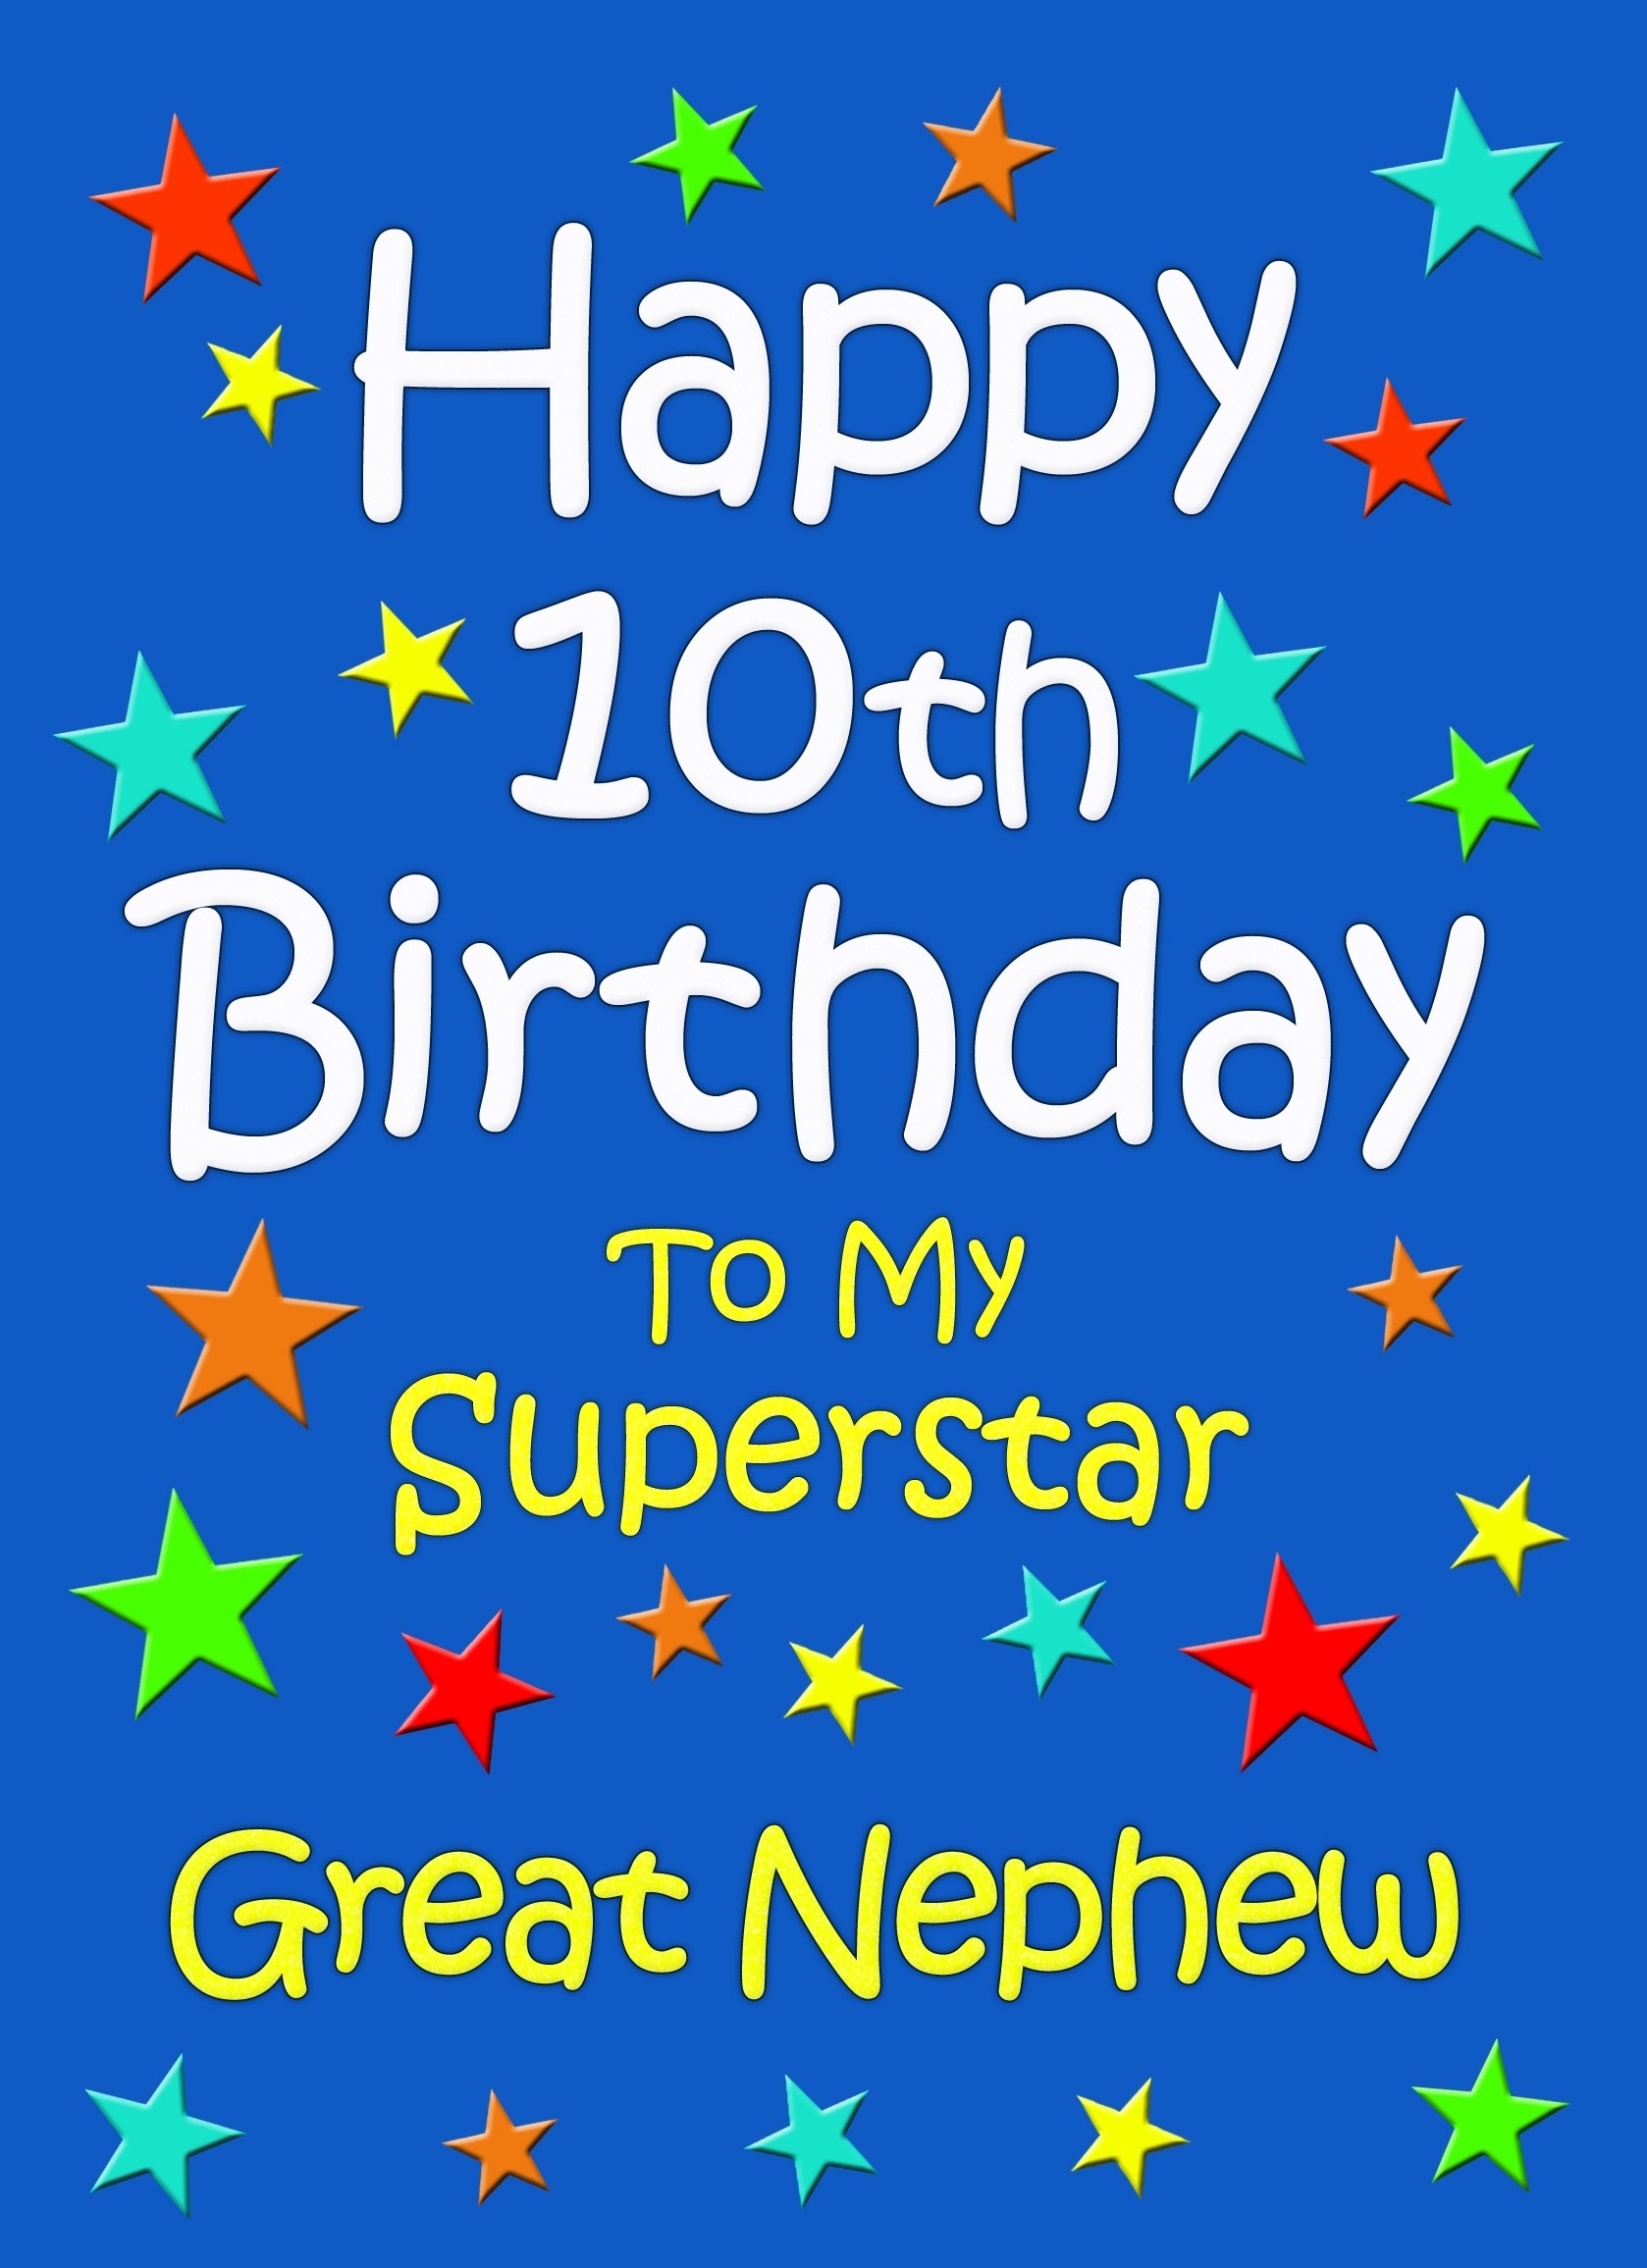 Great Nephew 10th Birthday Card (Blue)